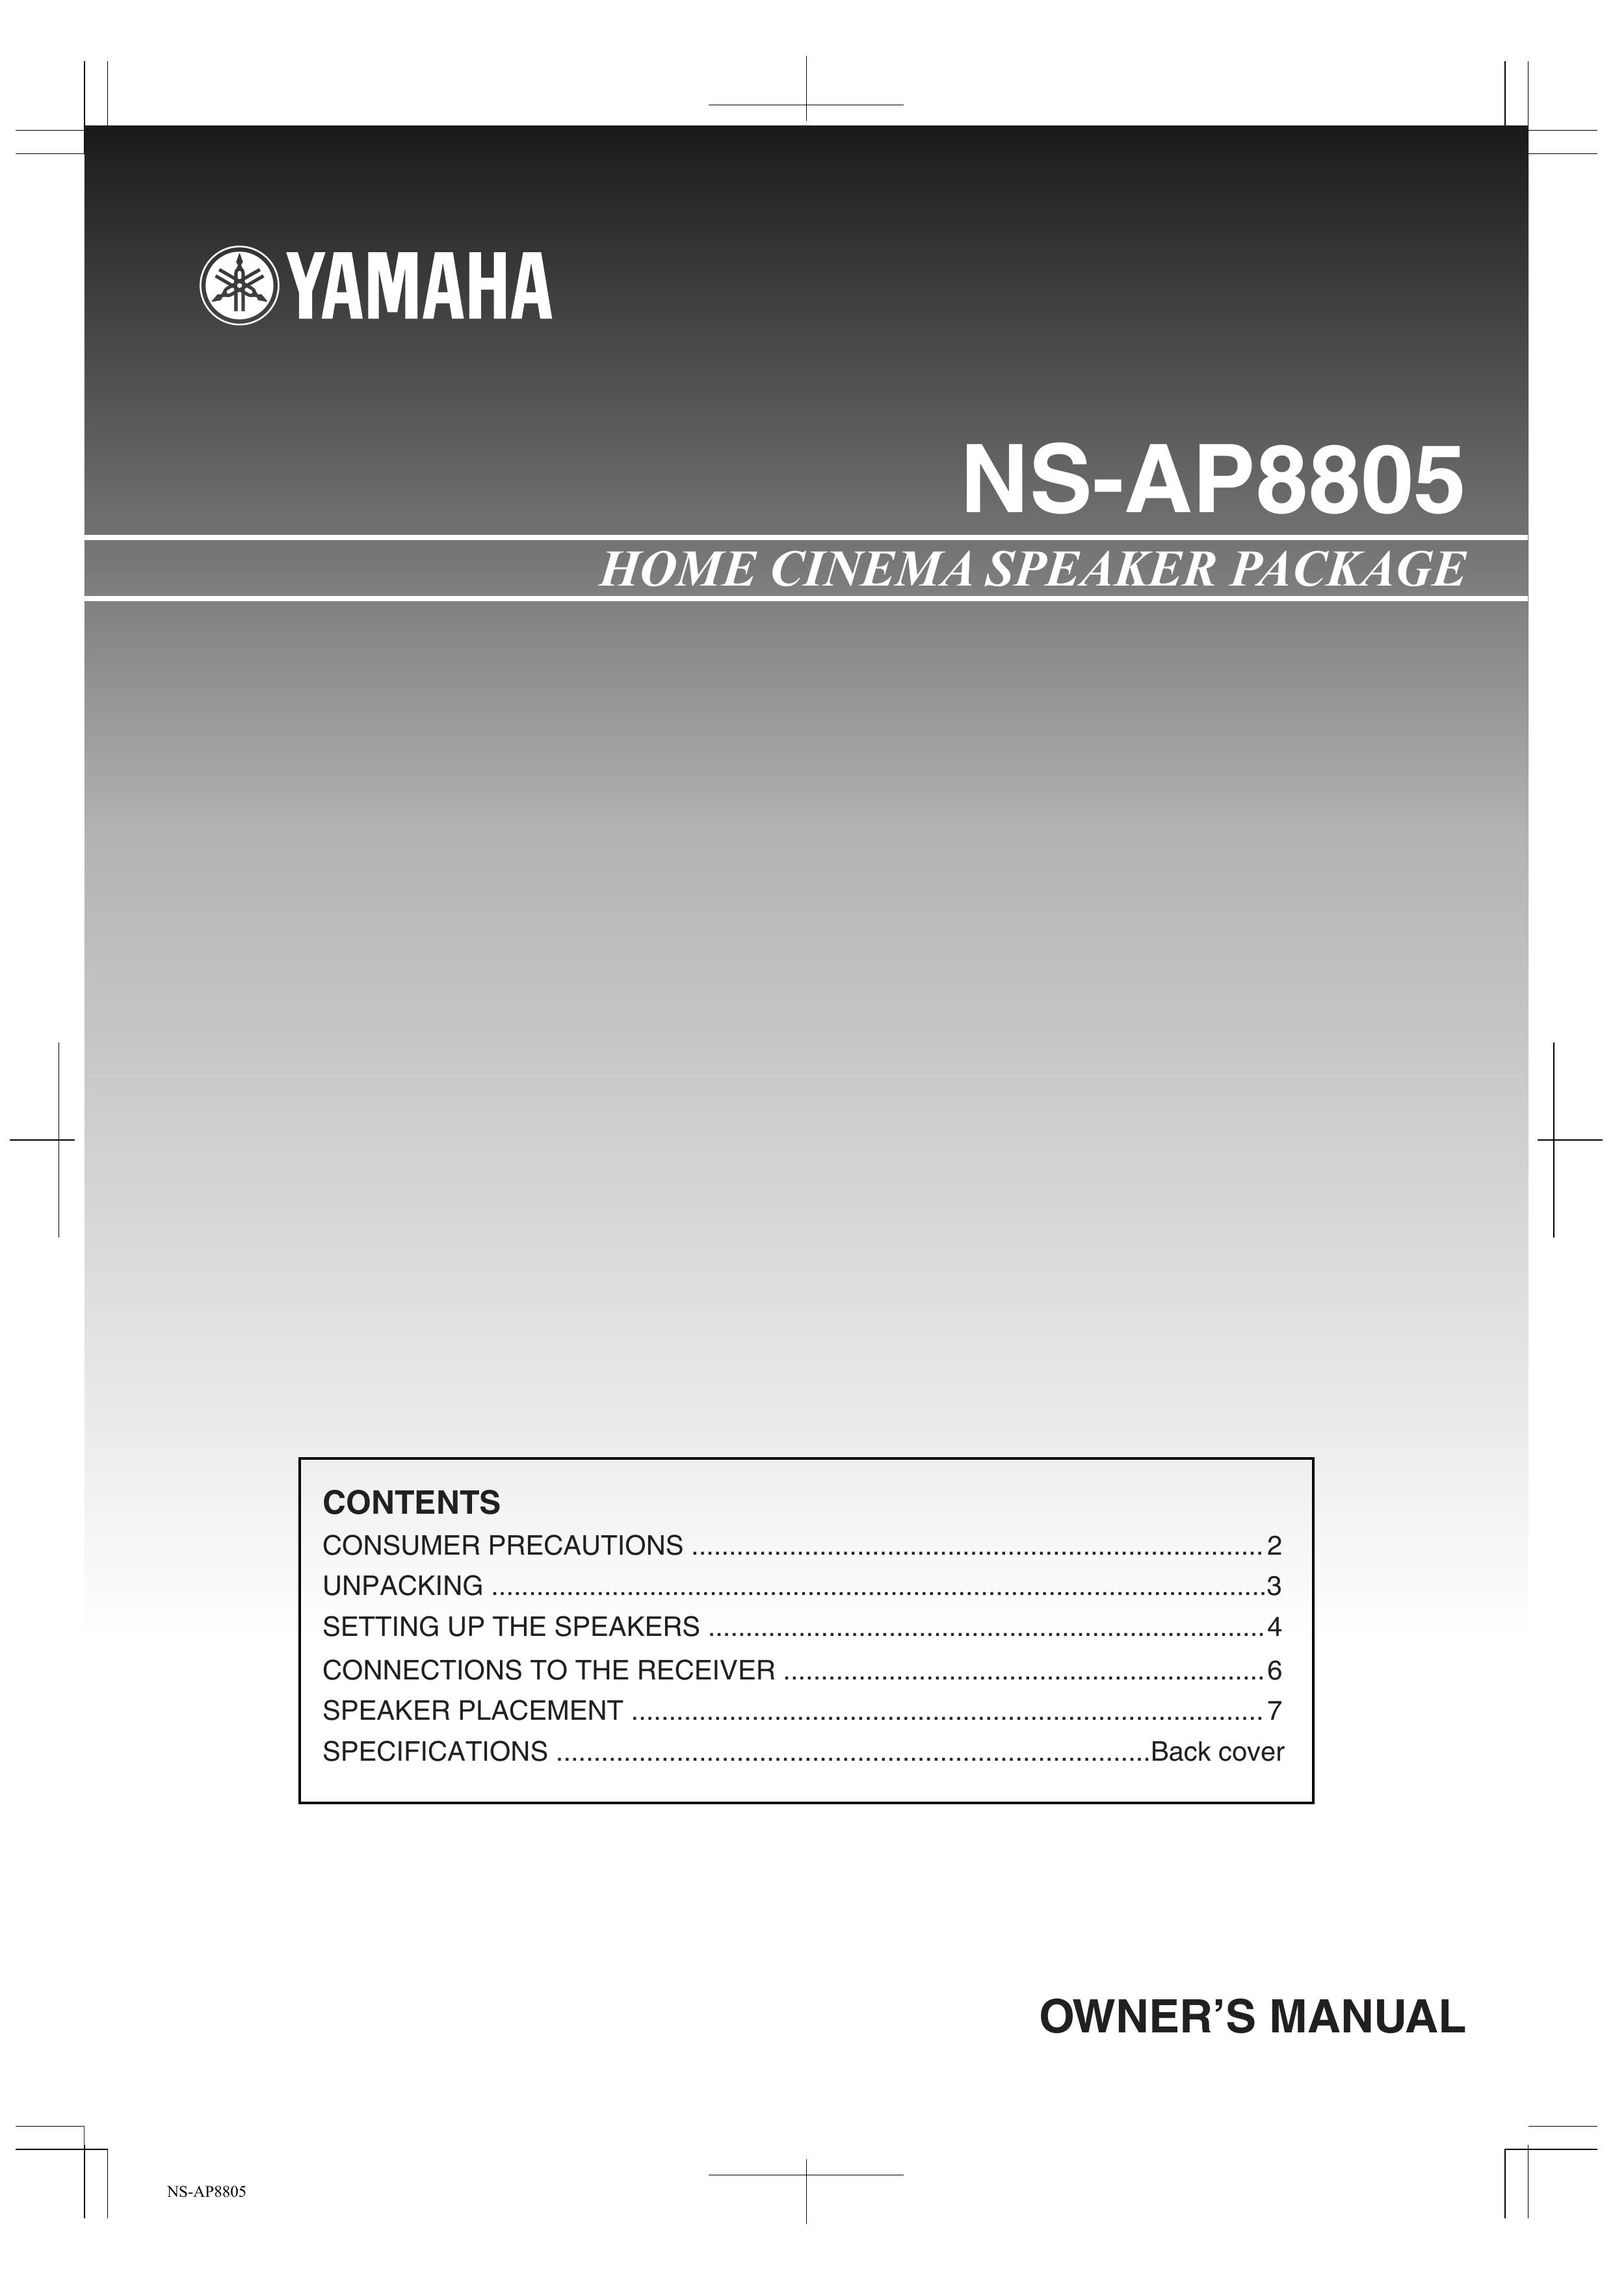 Yamaha NS-AP8805 Home Theater System User Manual